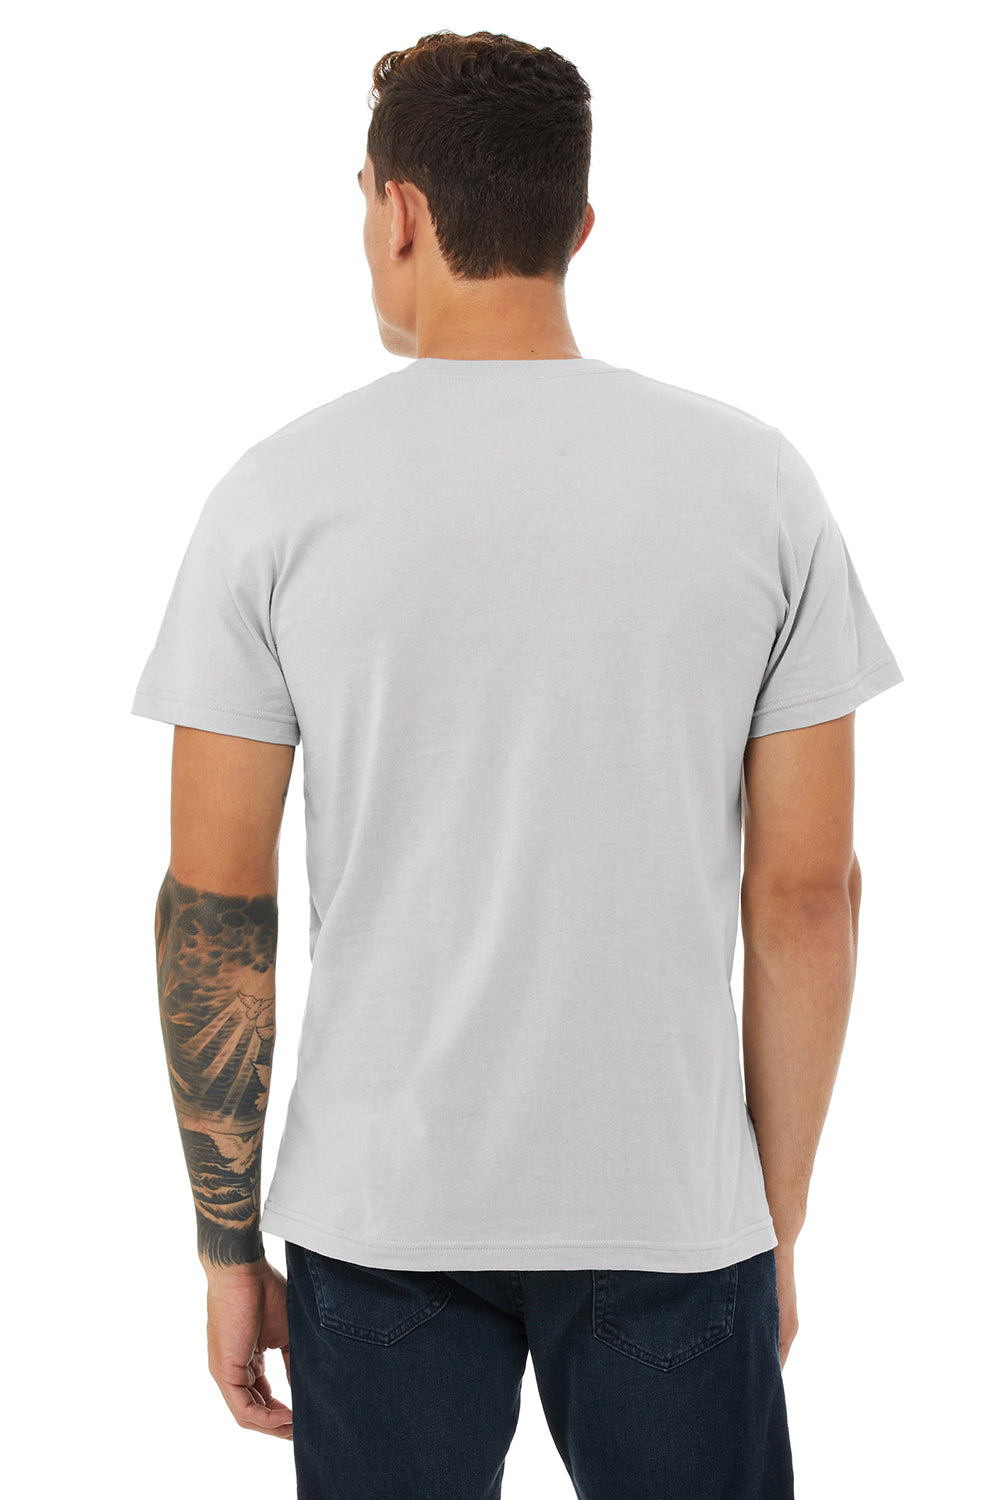 Bella + Canvas BC3001/3001C Mens Jersey Short Sleeve Crewneck T-Shirt Solid Athletic Grey Model Back